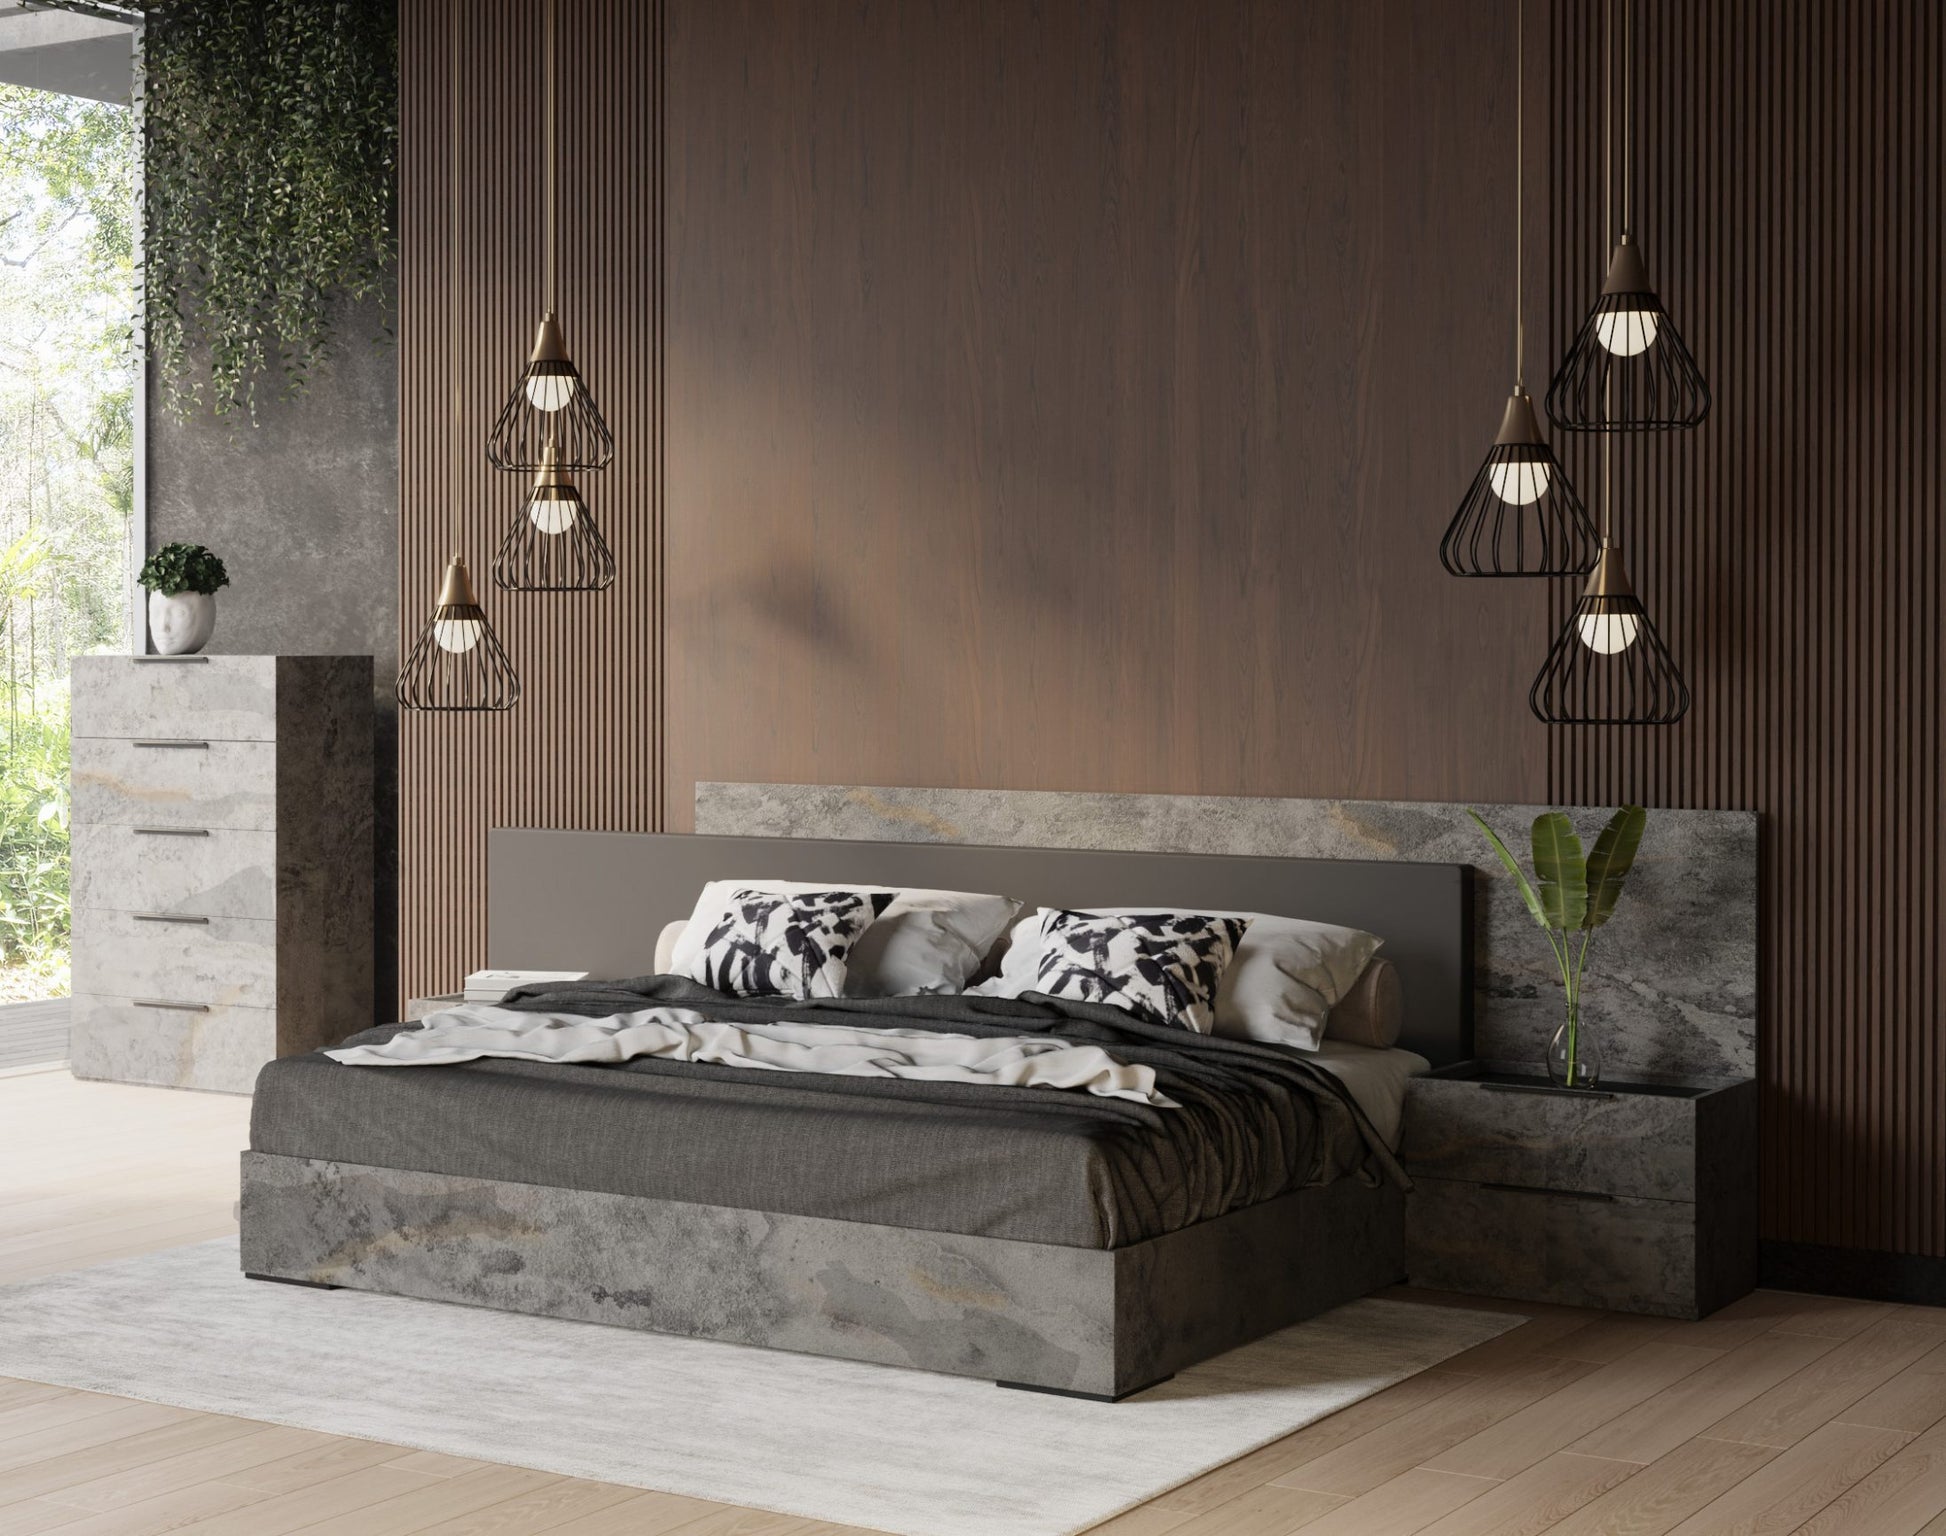 VIG Furniture Nova Domus Ferrara Volcano Oxide Grey Bed Nightstands